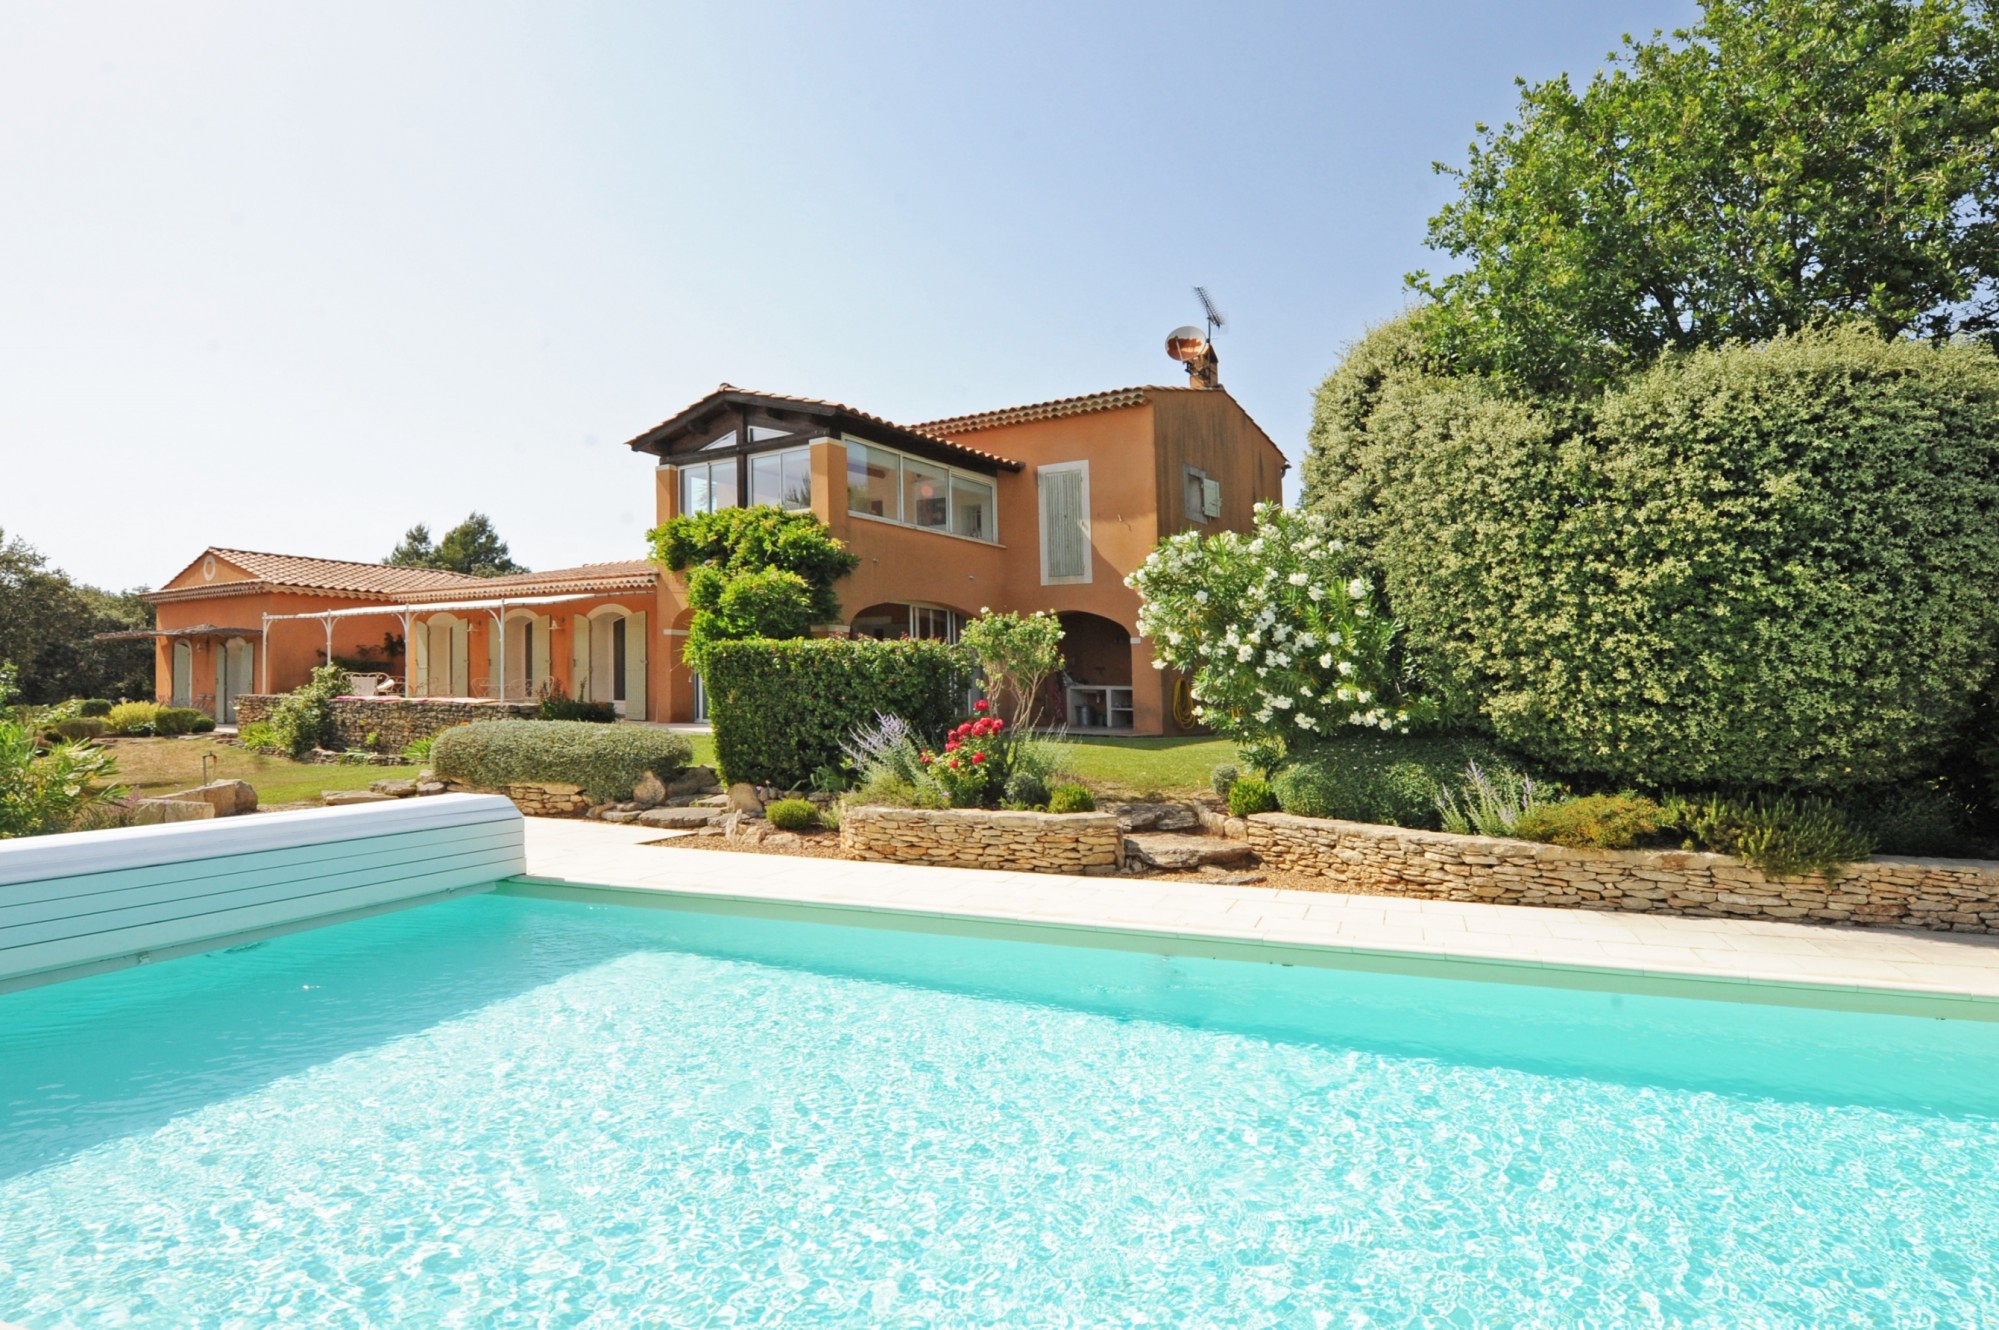 Cabrières d'Avignon: large contemporary villa with pool.